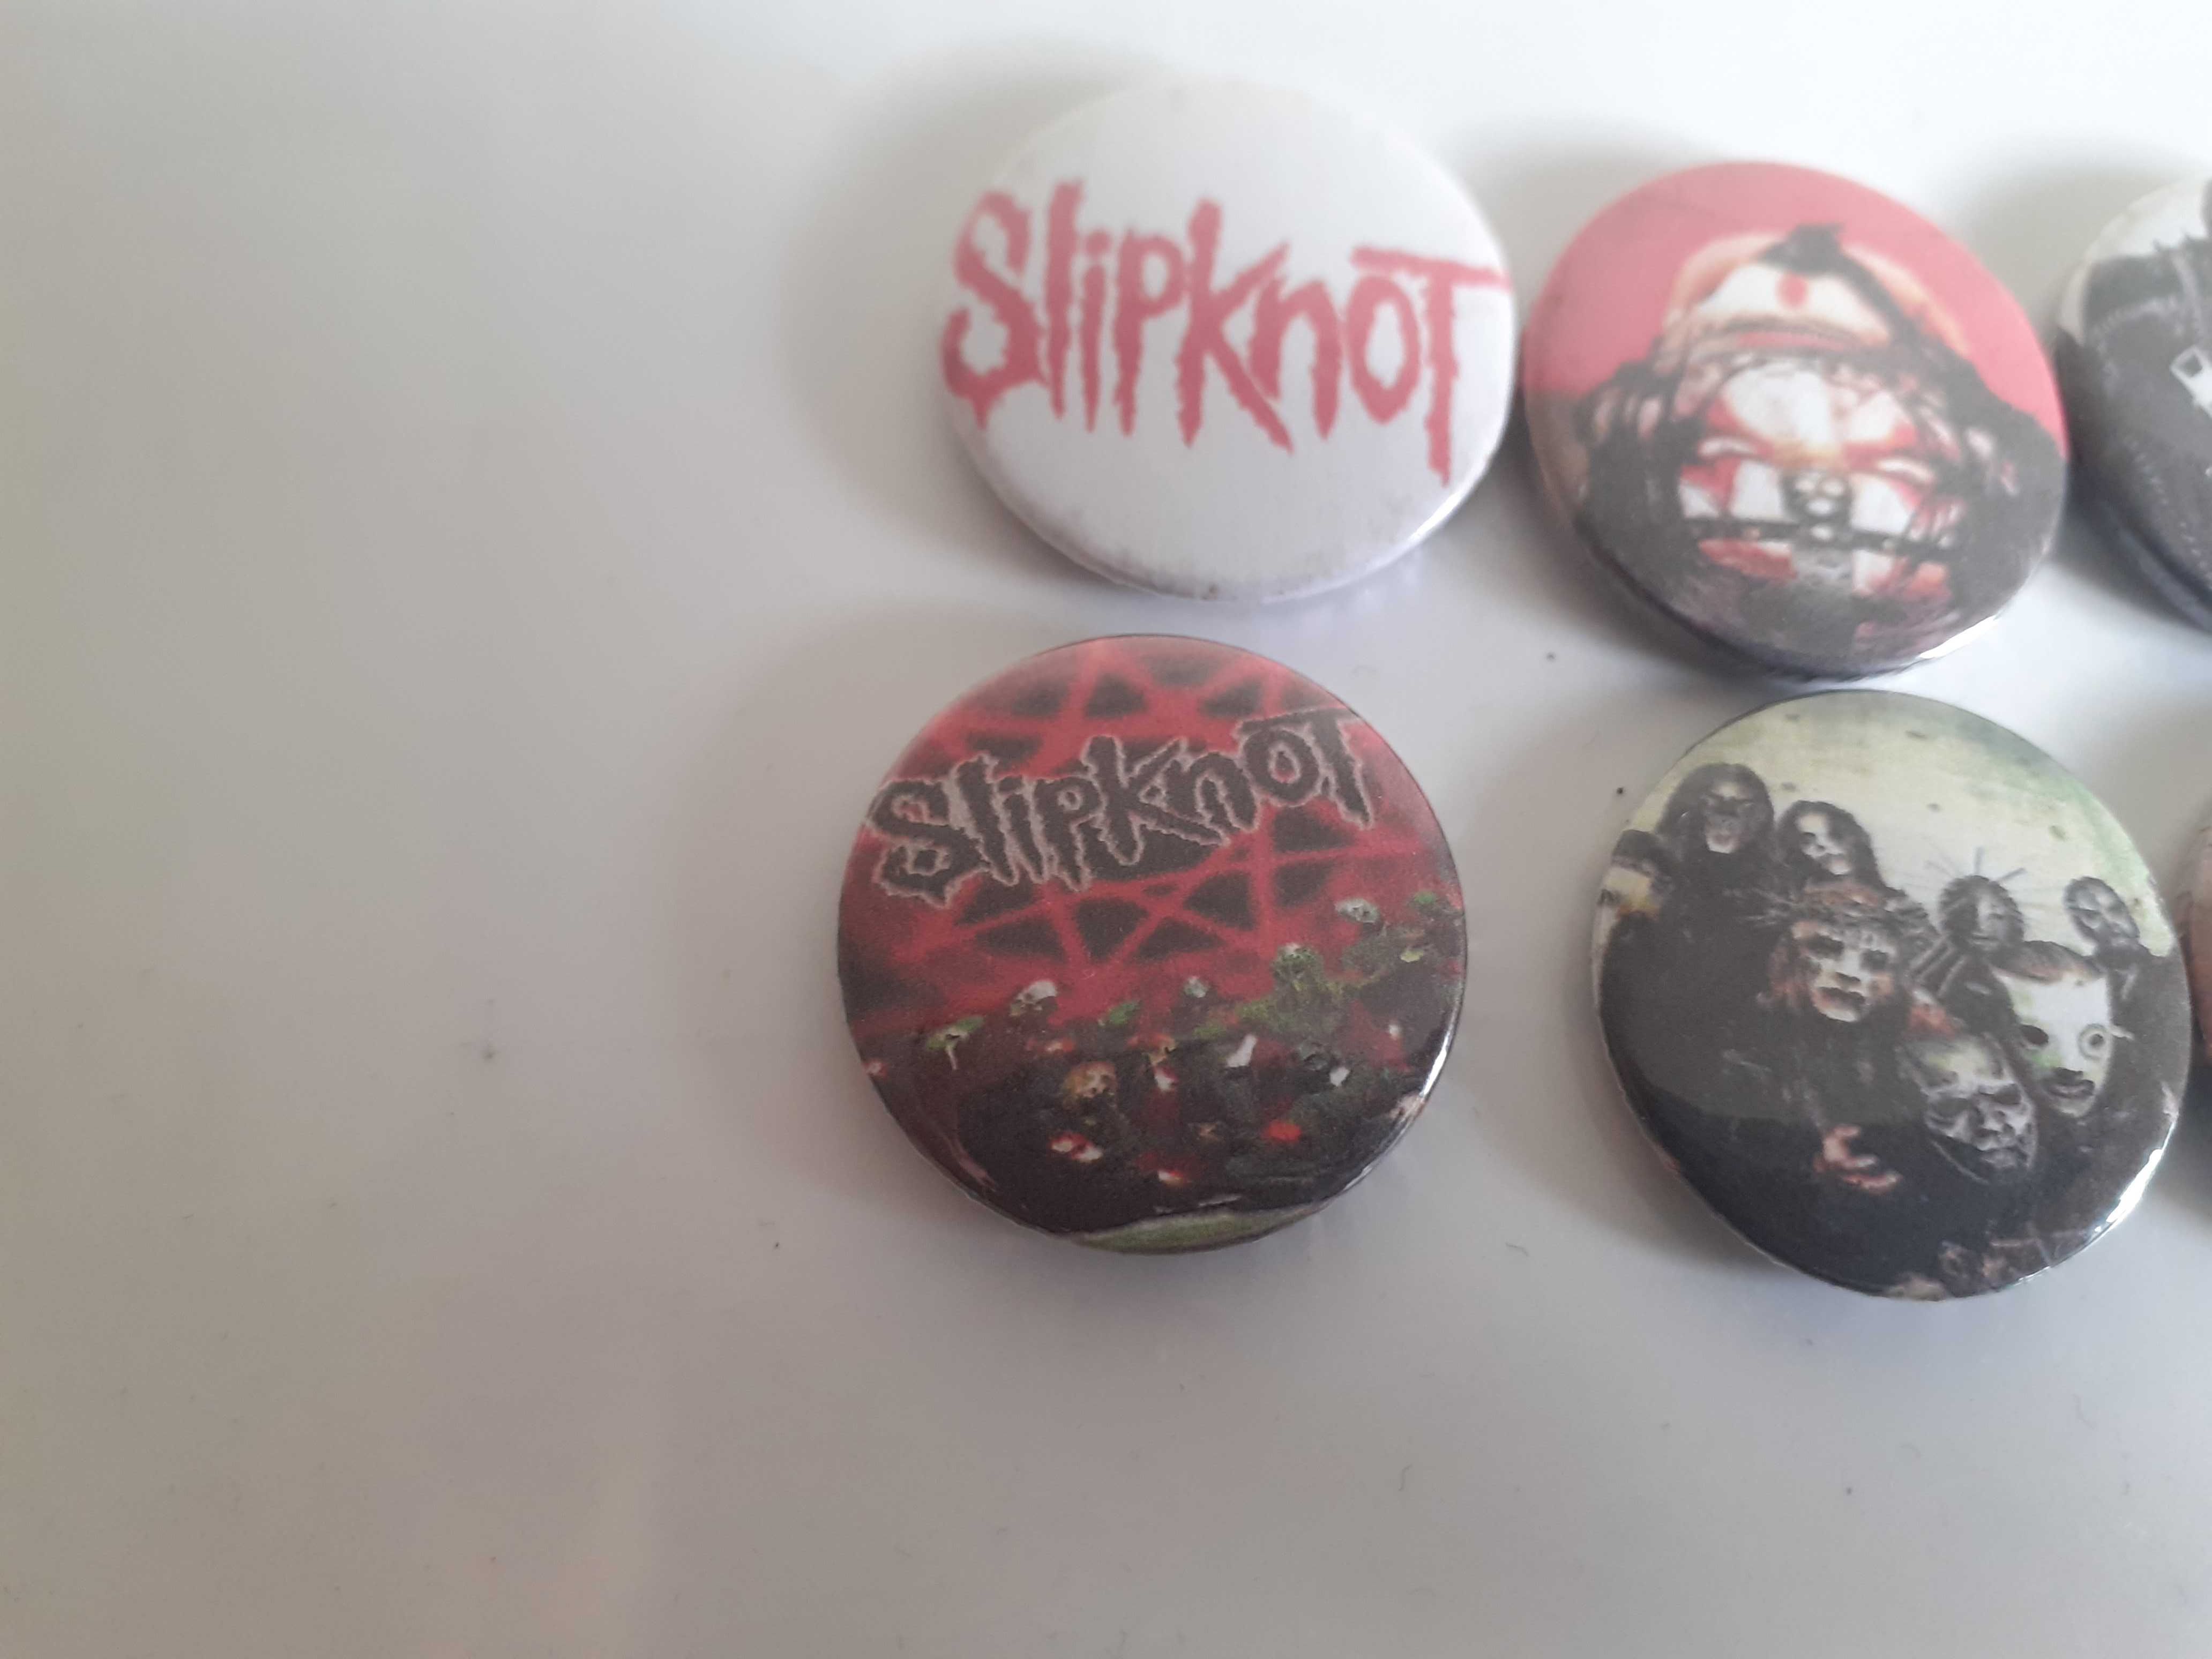 Значки на Heavy Metal бандата Slipknot